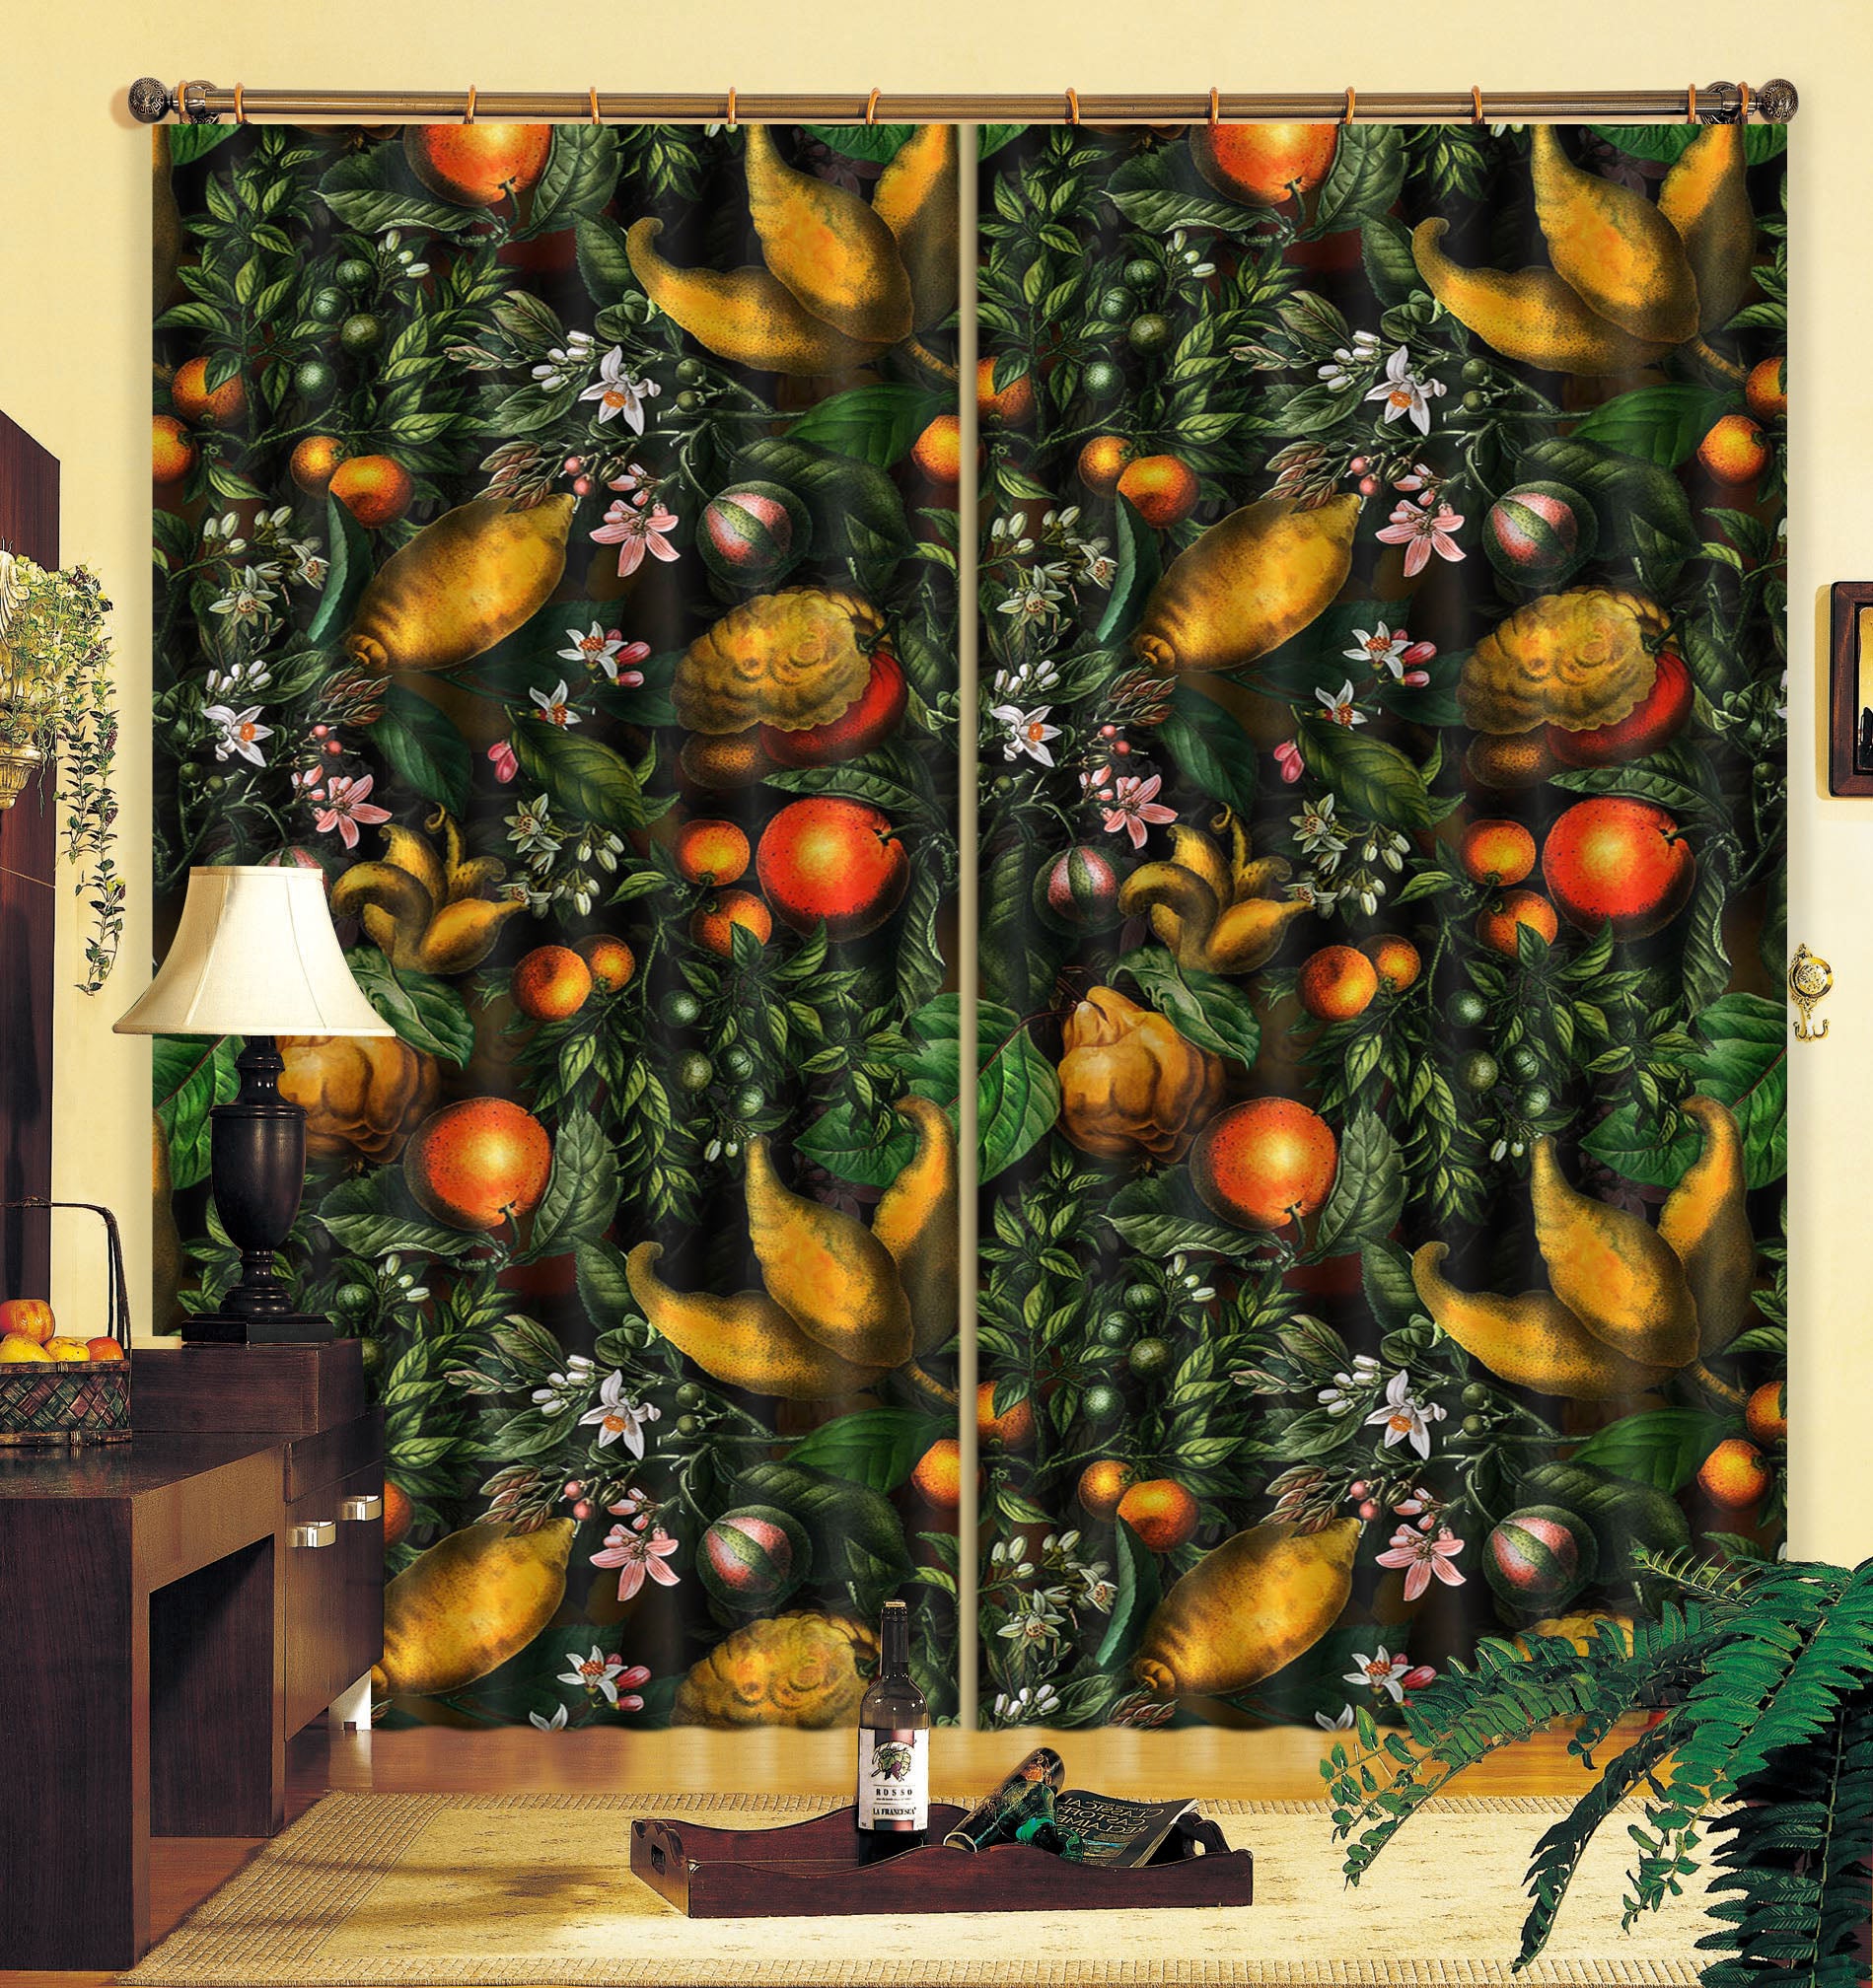 3D Golden Fruit 124 Uta Naumann Curtain Curtains Drapes